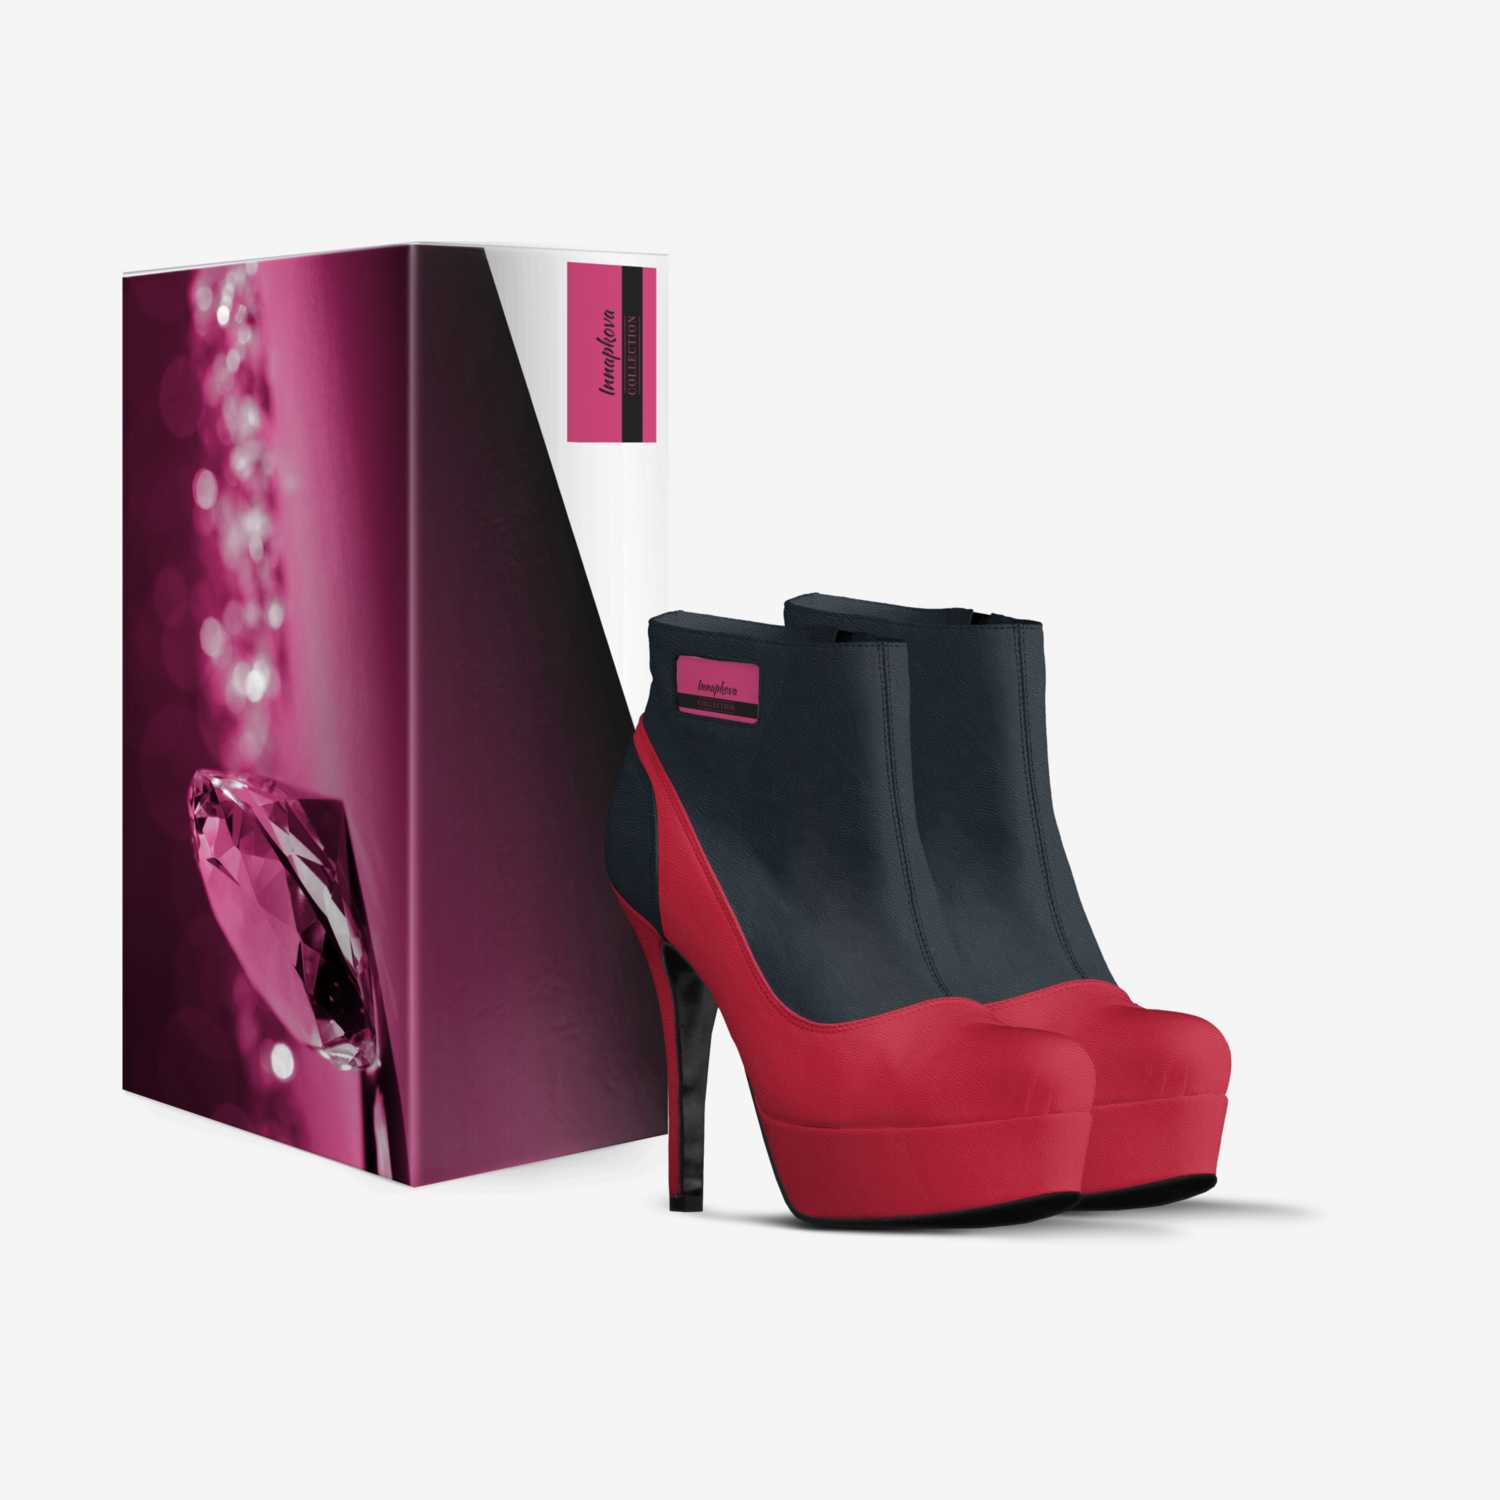 Innapkova custom made in Italy shoes by Ina Petkova | Box view